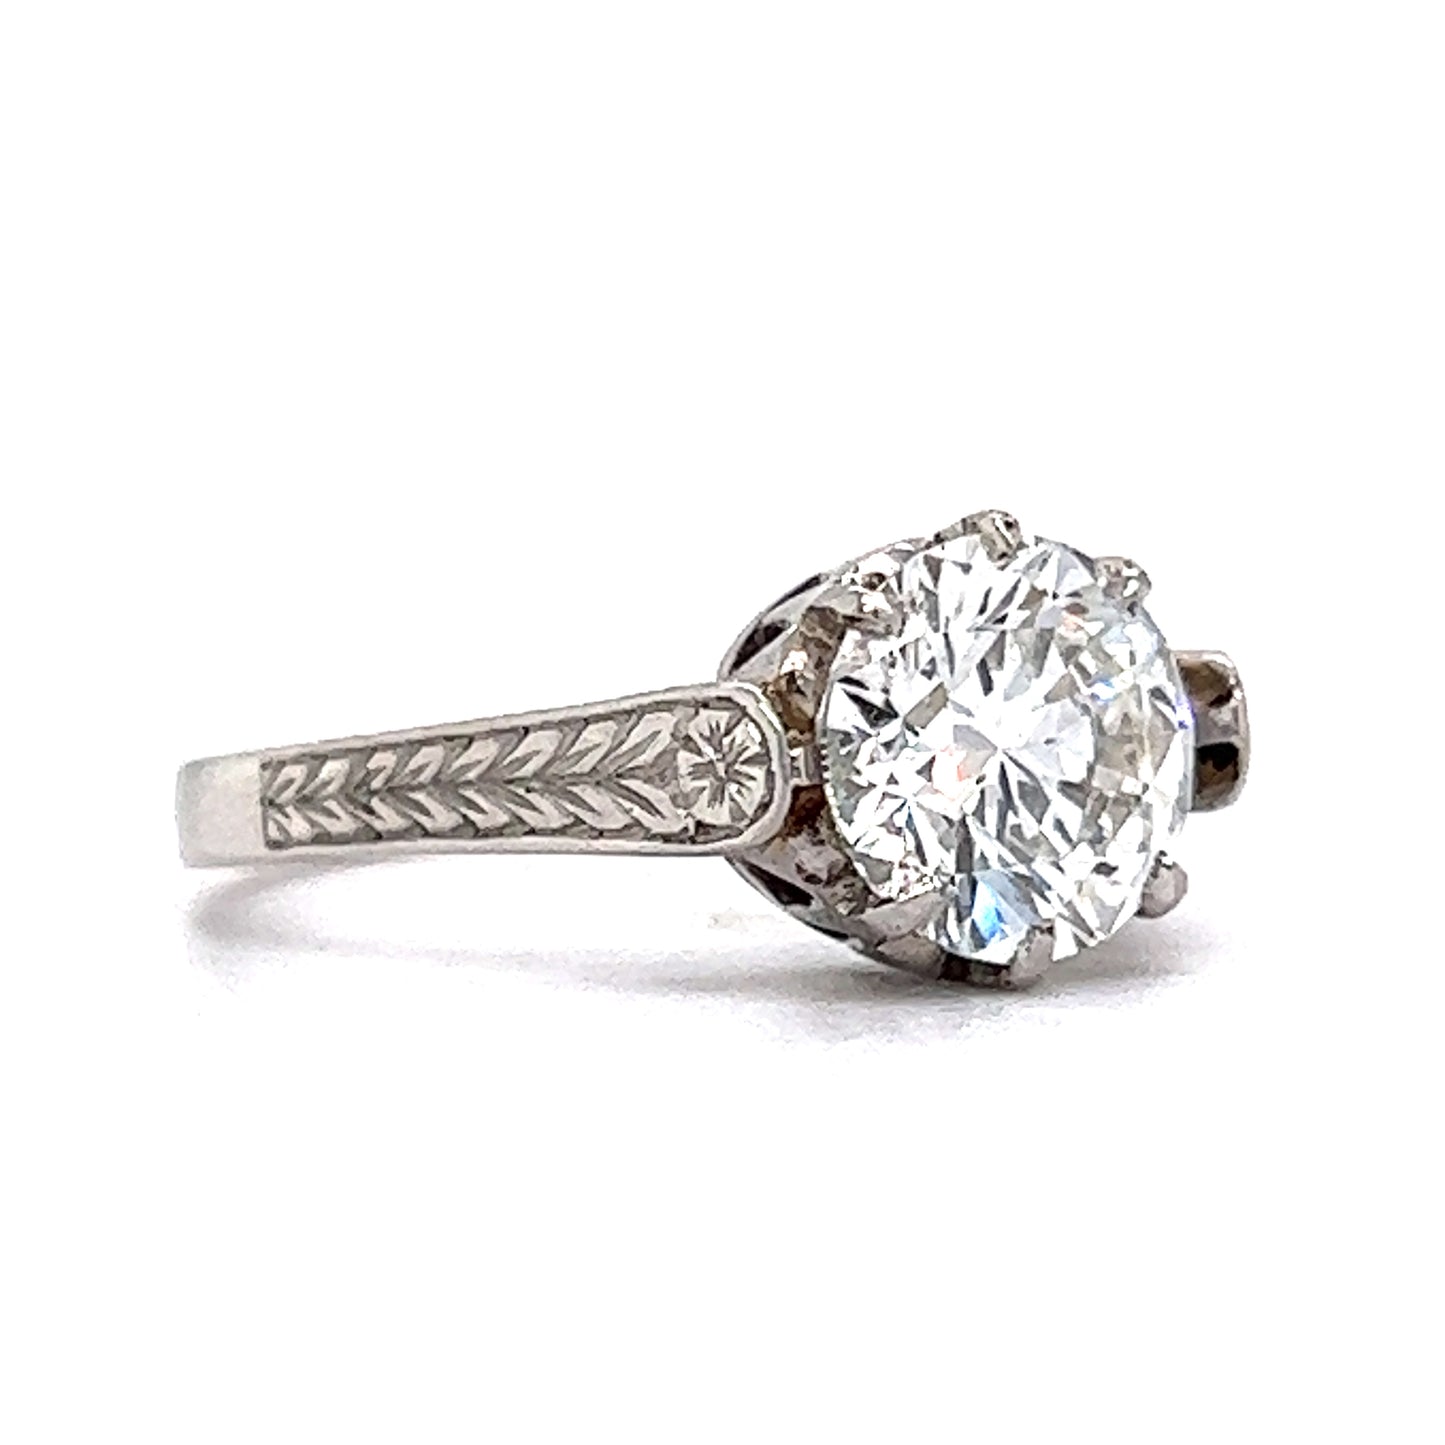 Art Deco Engraved Solitaire Diamond Engagement Ring in Platinum